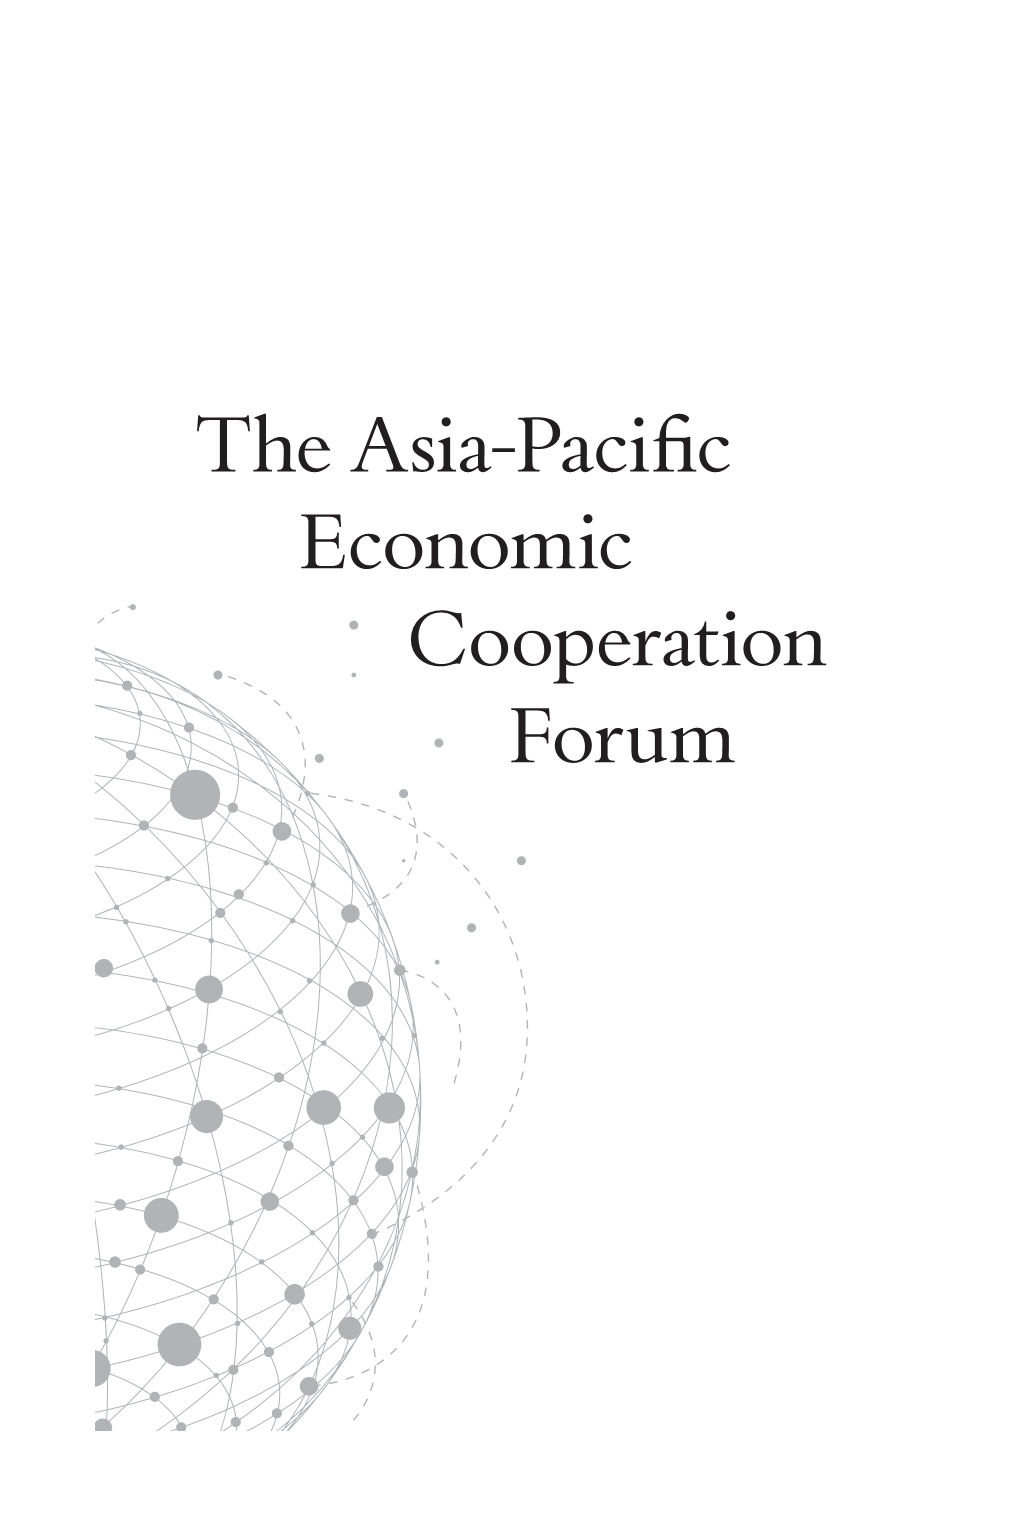 The Asia-Pacific Economic Cooperation Forum